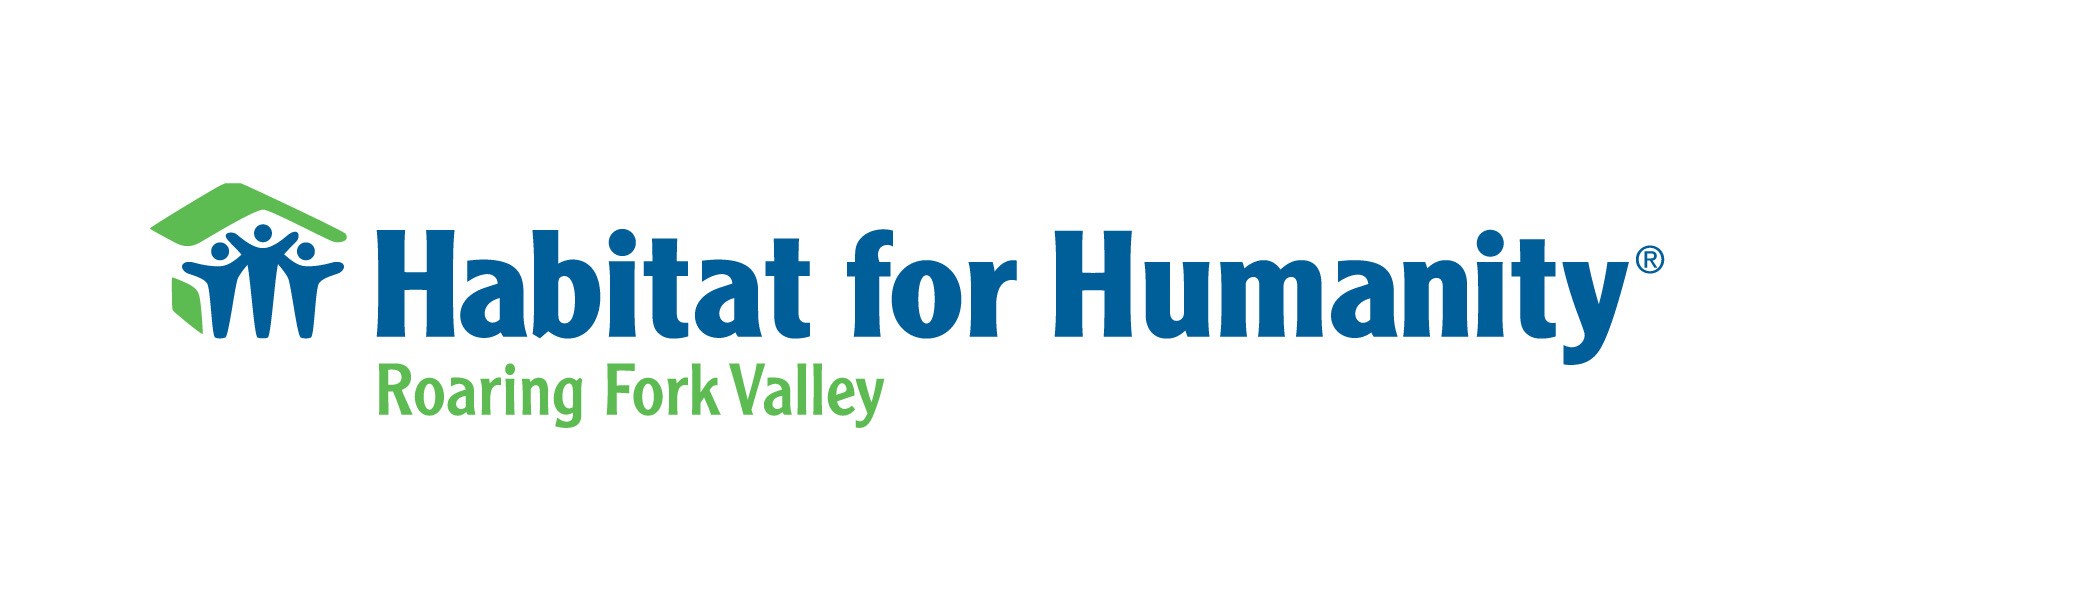 Habitat For Humanity Roaring Fork Valley company logo